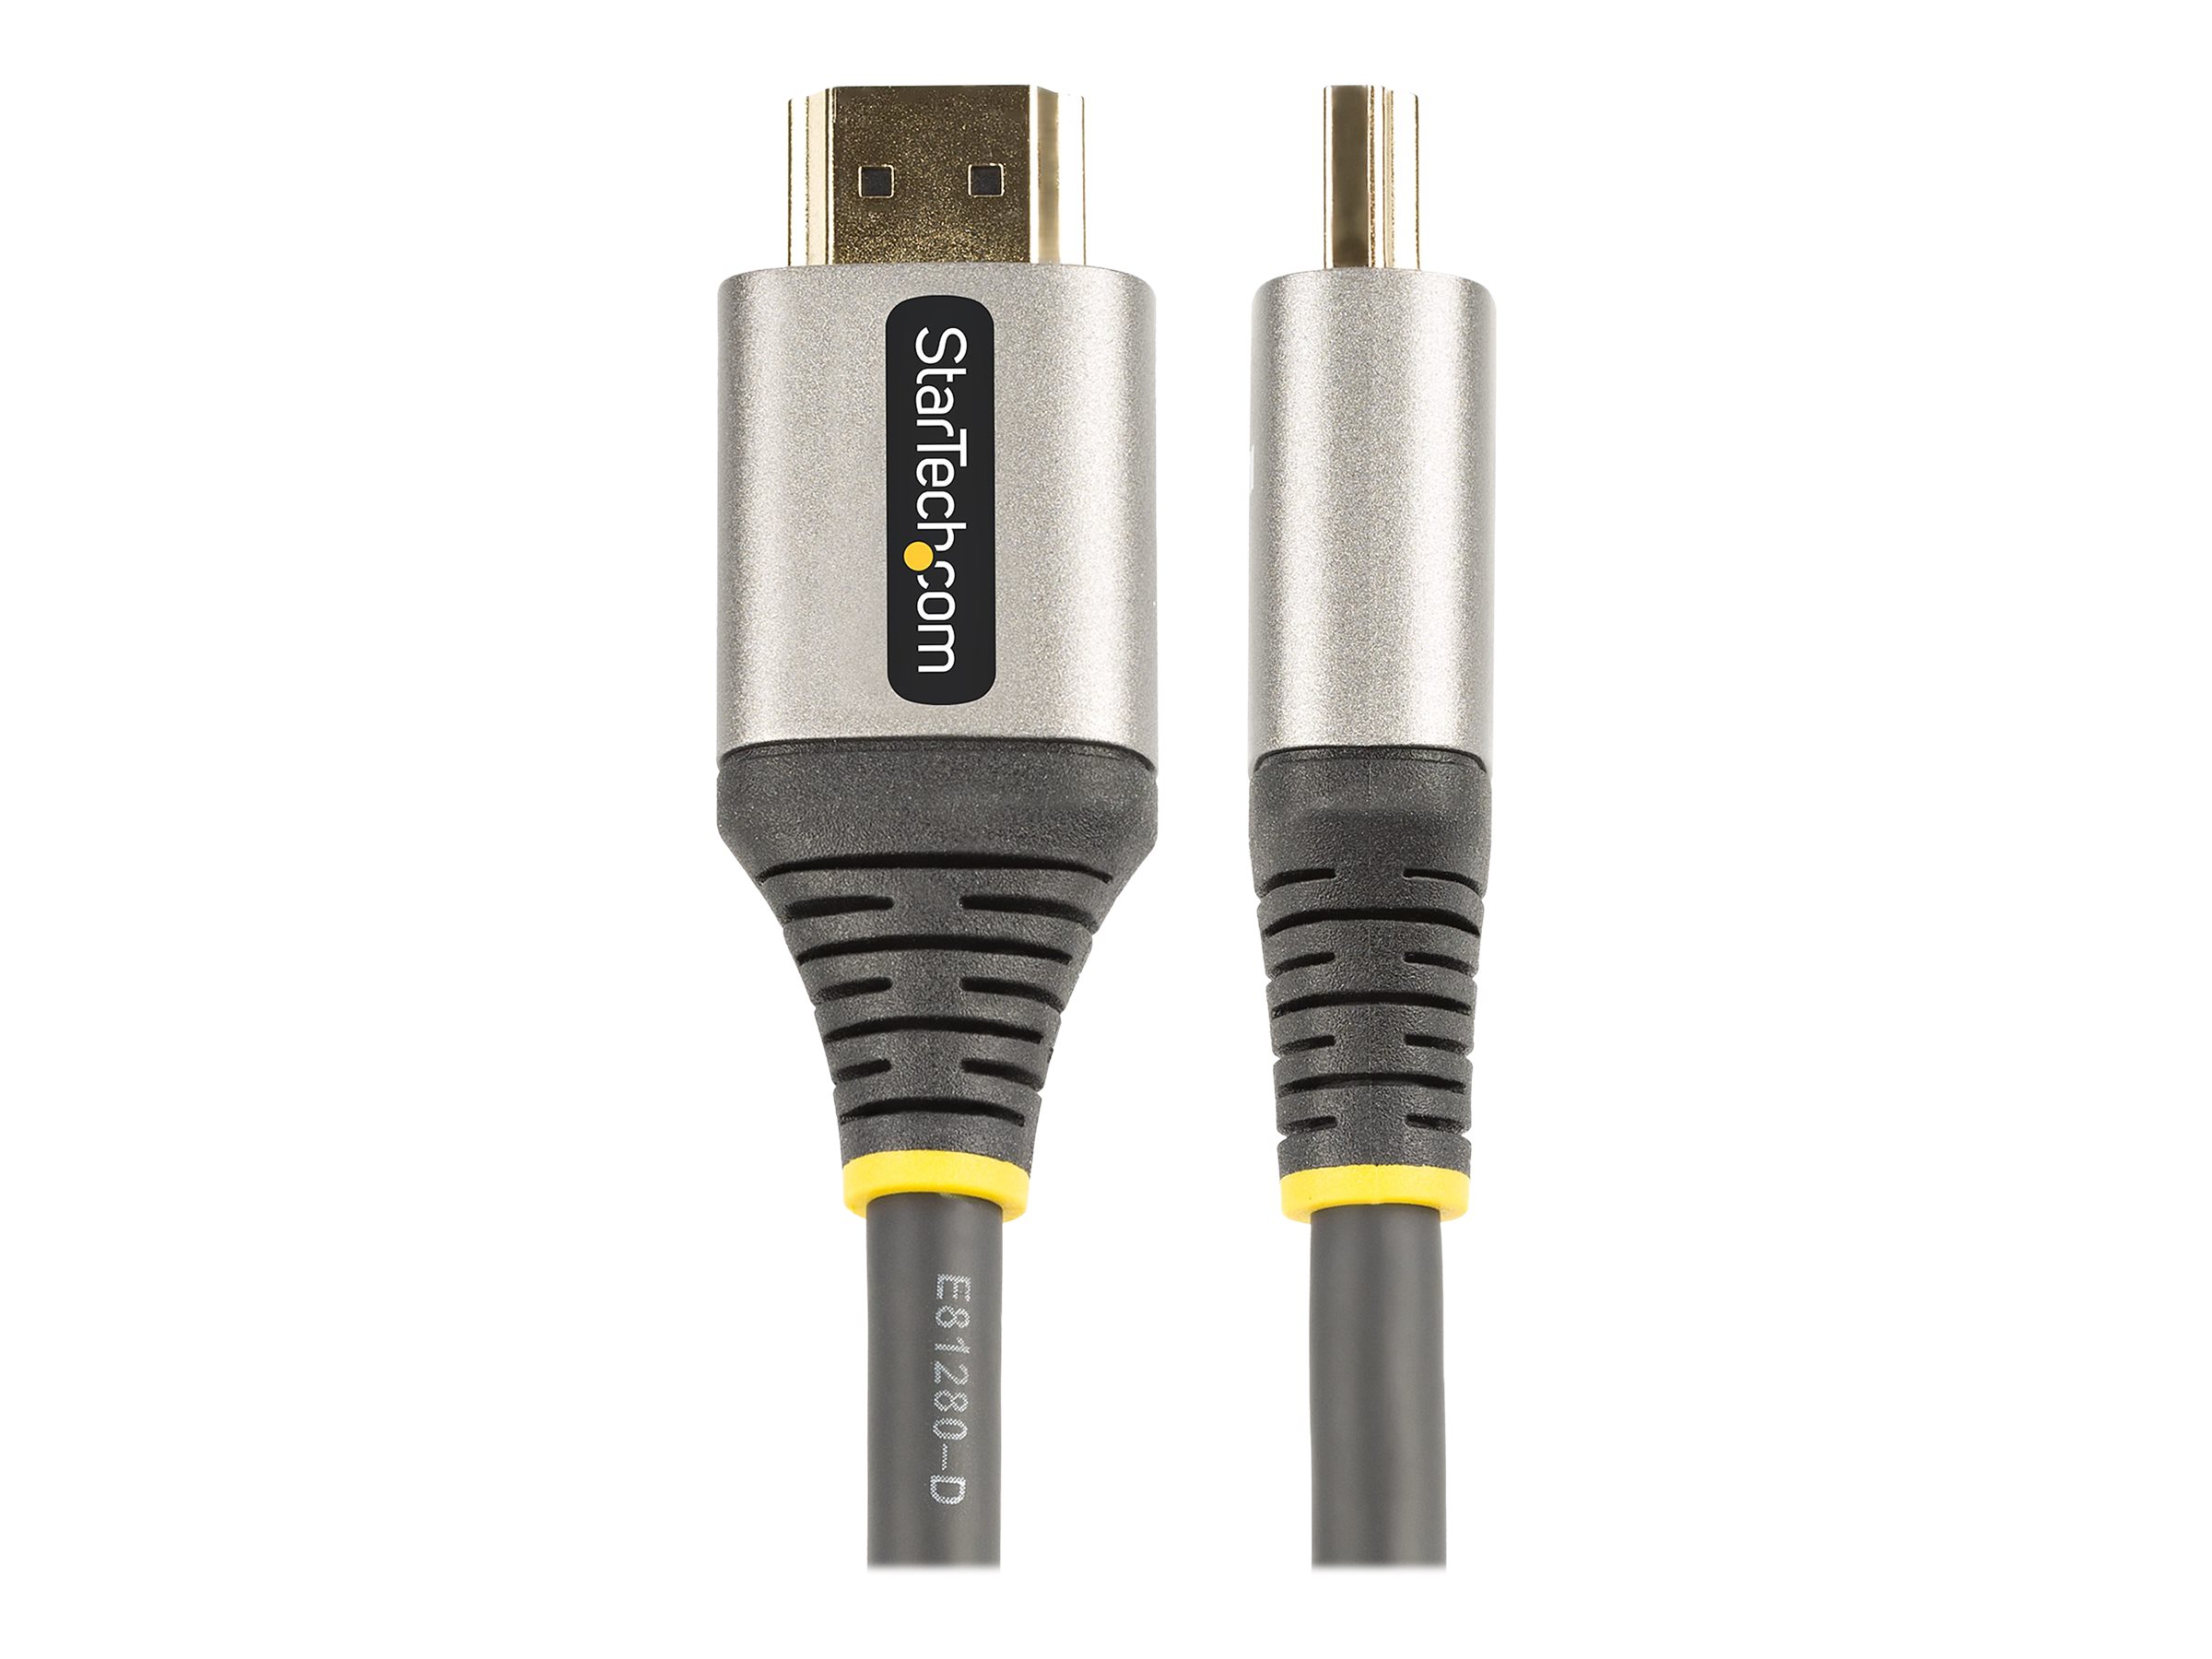 StarTech.com 5m HDMI 2.1 Kabel 8K - Zertifiziertes Ultra High Speed HDMI Kabel 48Gbit/s - 8K 60Hz/4K 120Hz HDR10+ eARC - UHD 8K HDMI Monitorkabel - Monitor/TV - Flexible TPE Ummantelung  (HDMM21V5M) - HDMI-Kabel mit Ethernet - 5 m